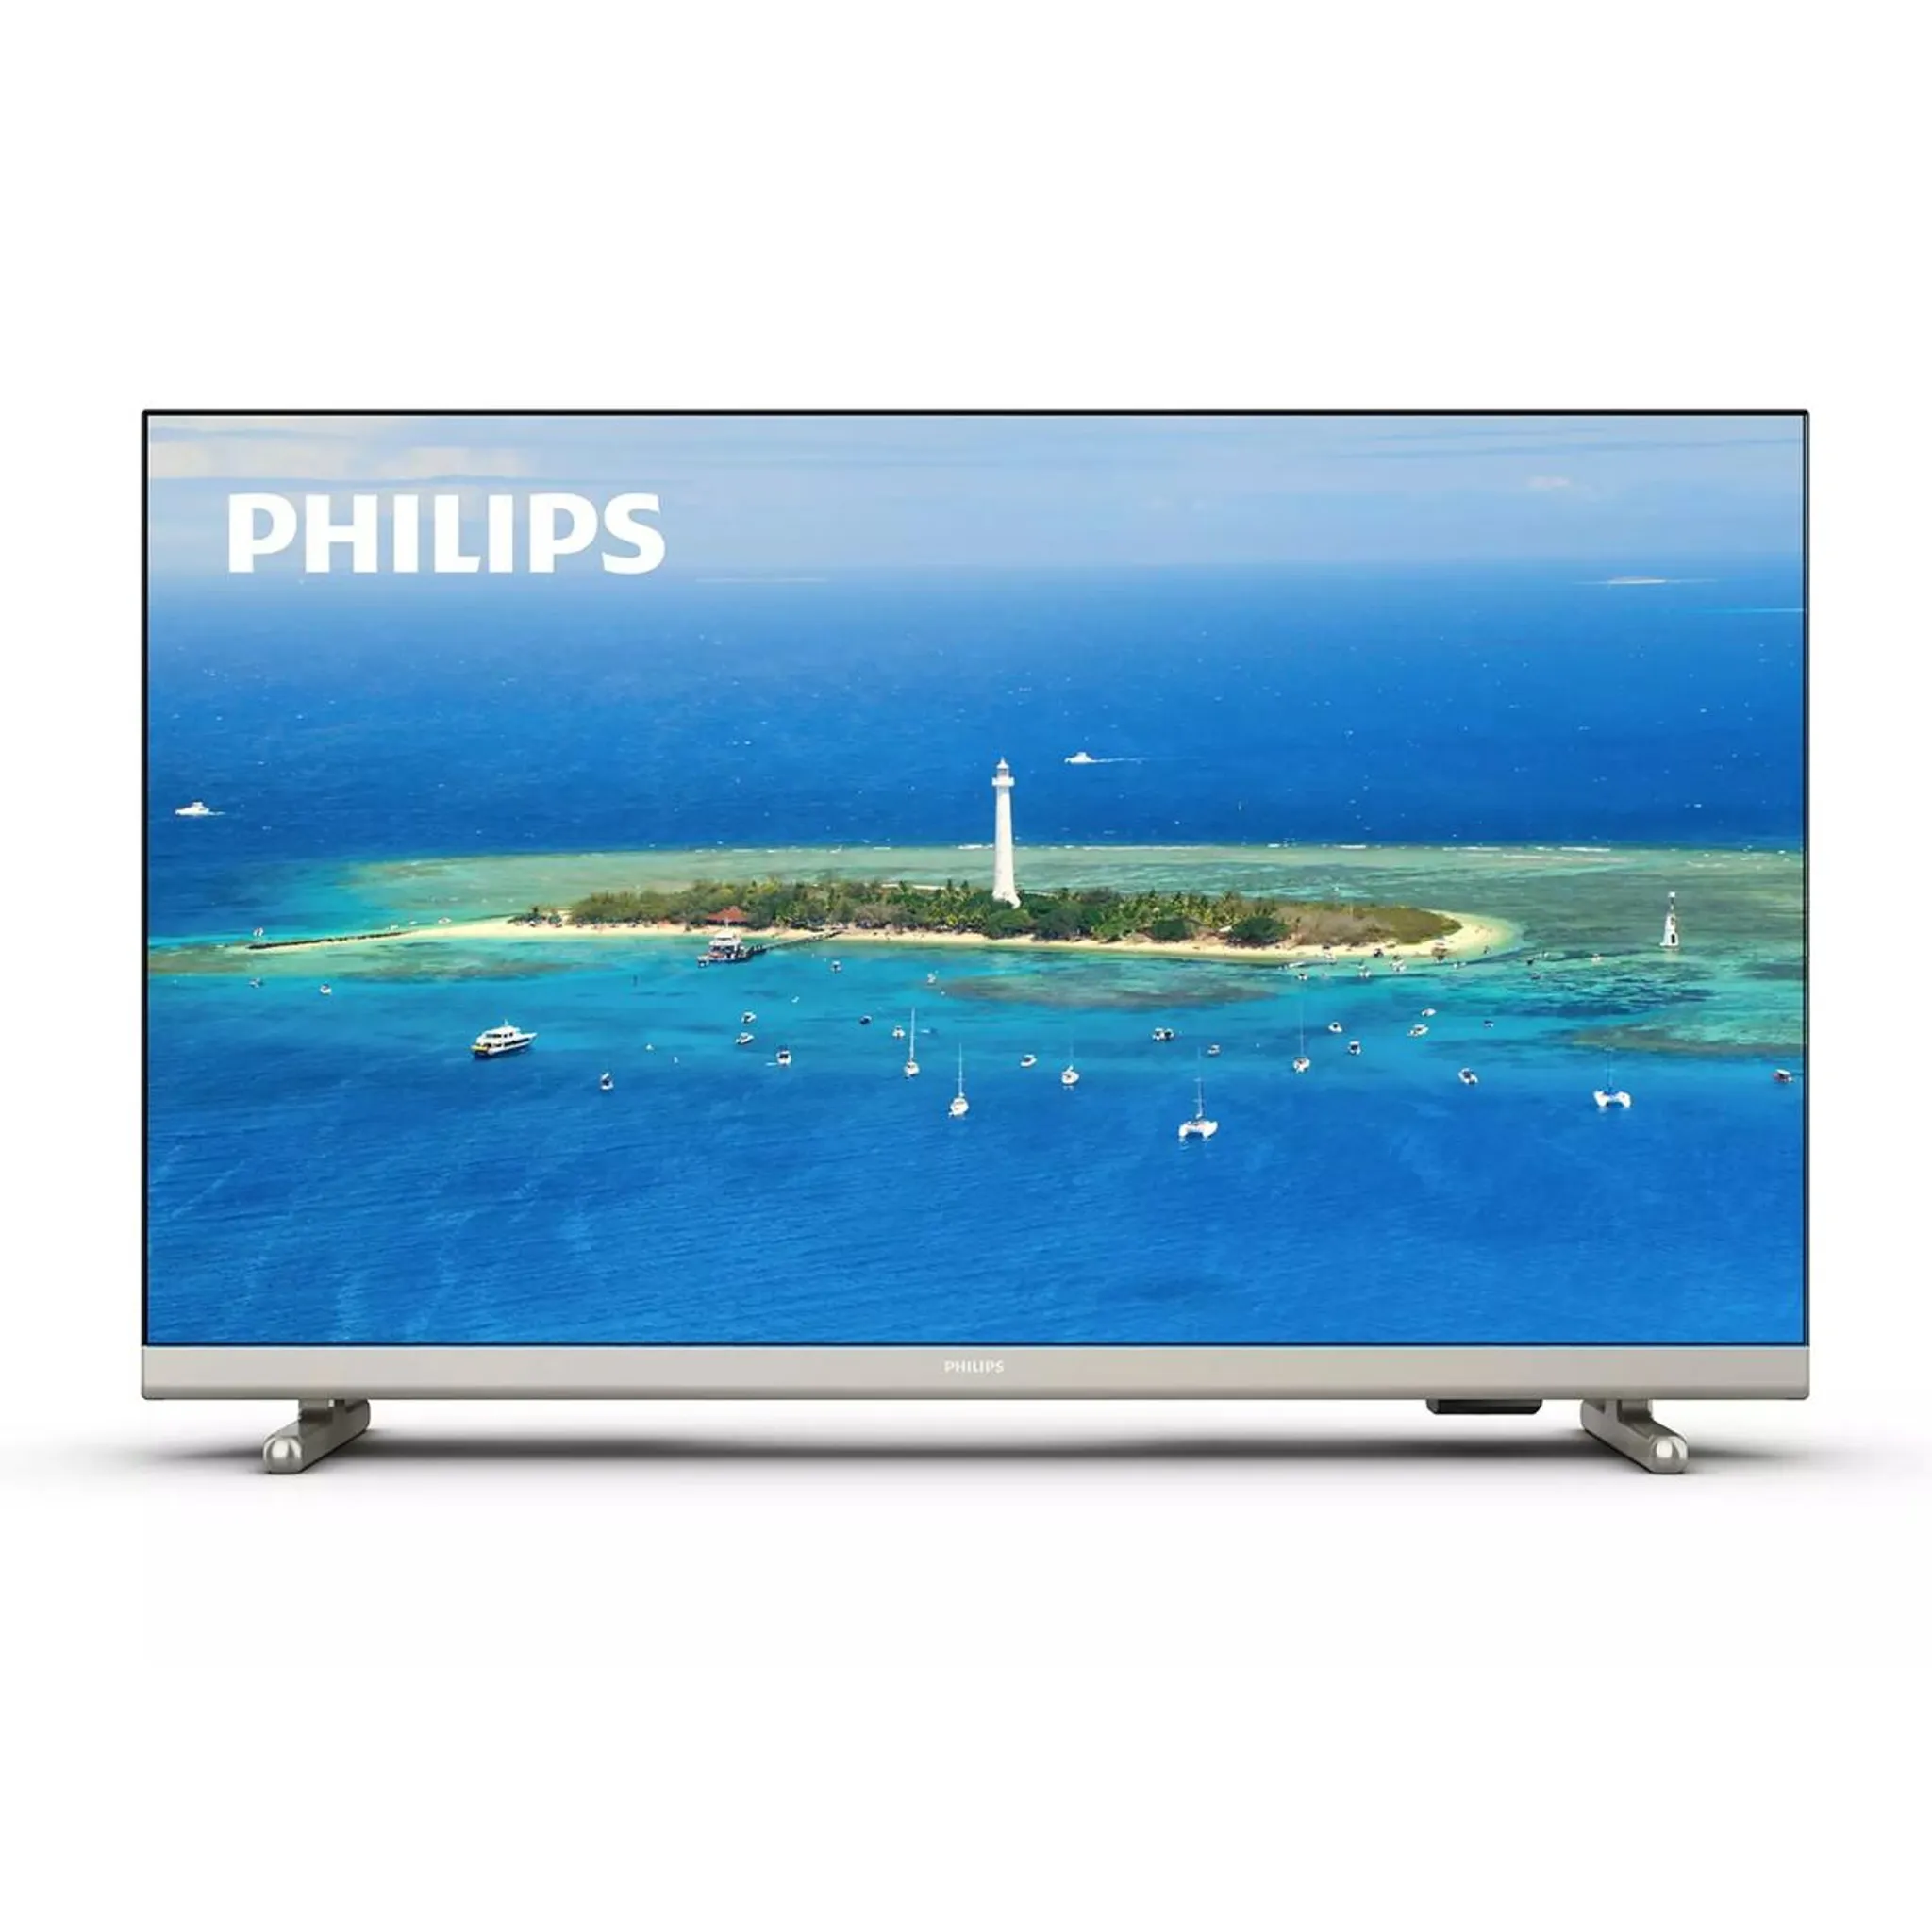 PHILIPS Fernseher 32PHS5527/12 LED HD TV 32 | alle Fernseher